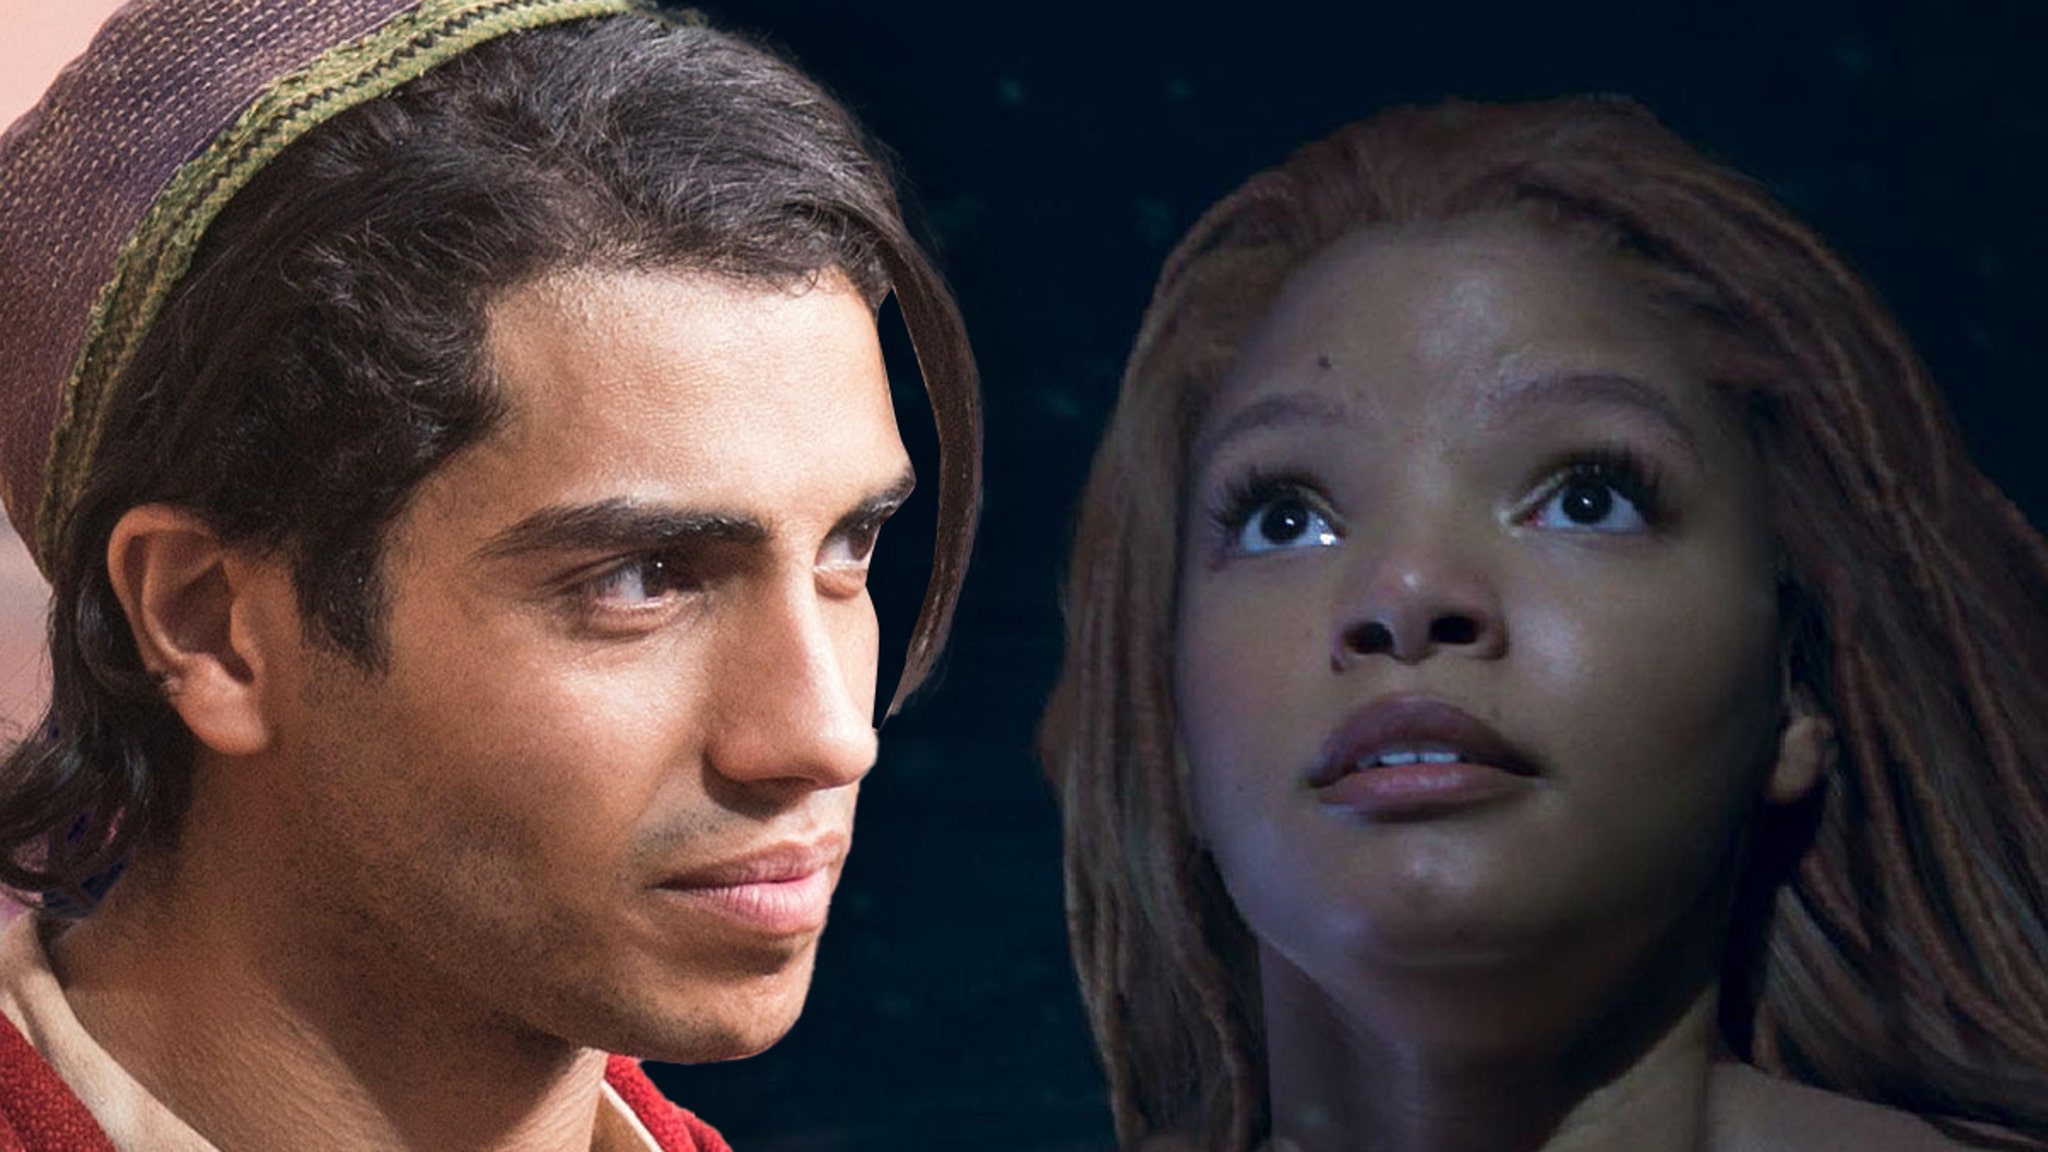 ‘Aladdin’ Star Mena Massoud Scrubs Twitter After ‘Little Mermaid’ Backlash